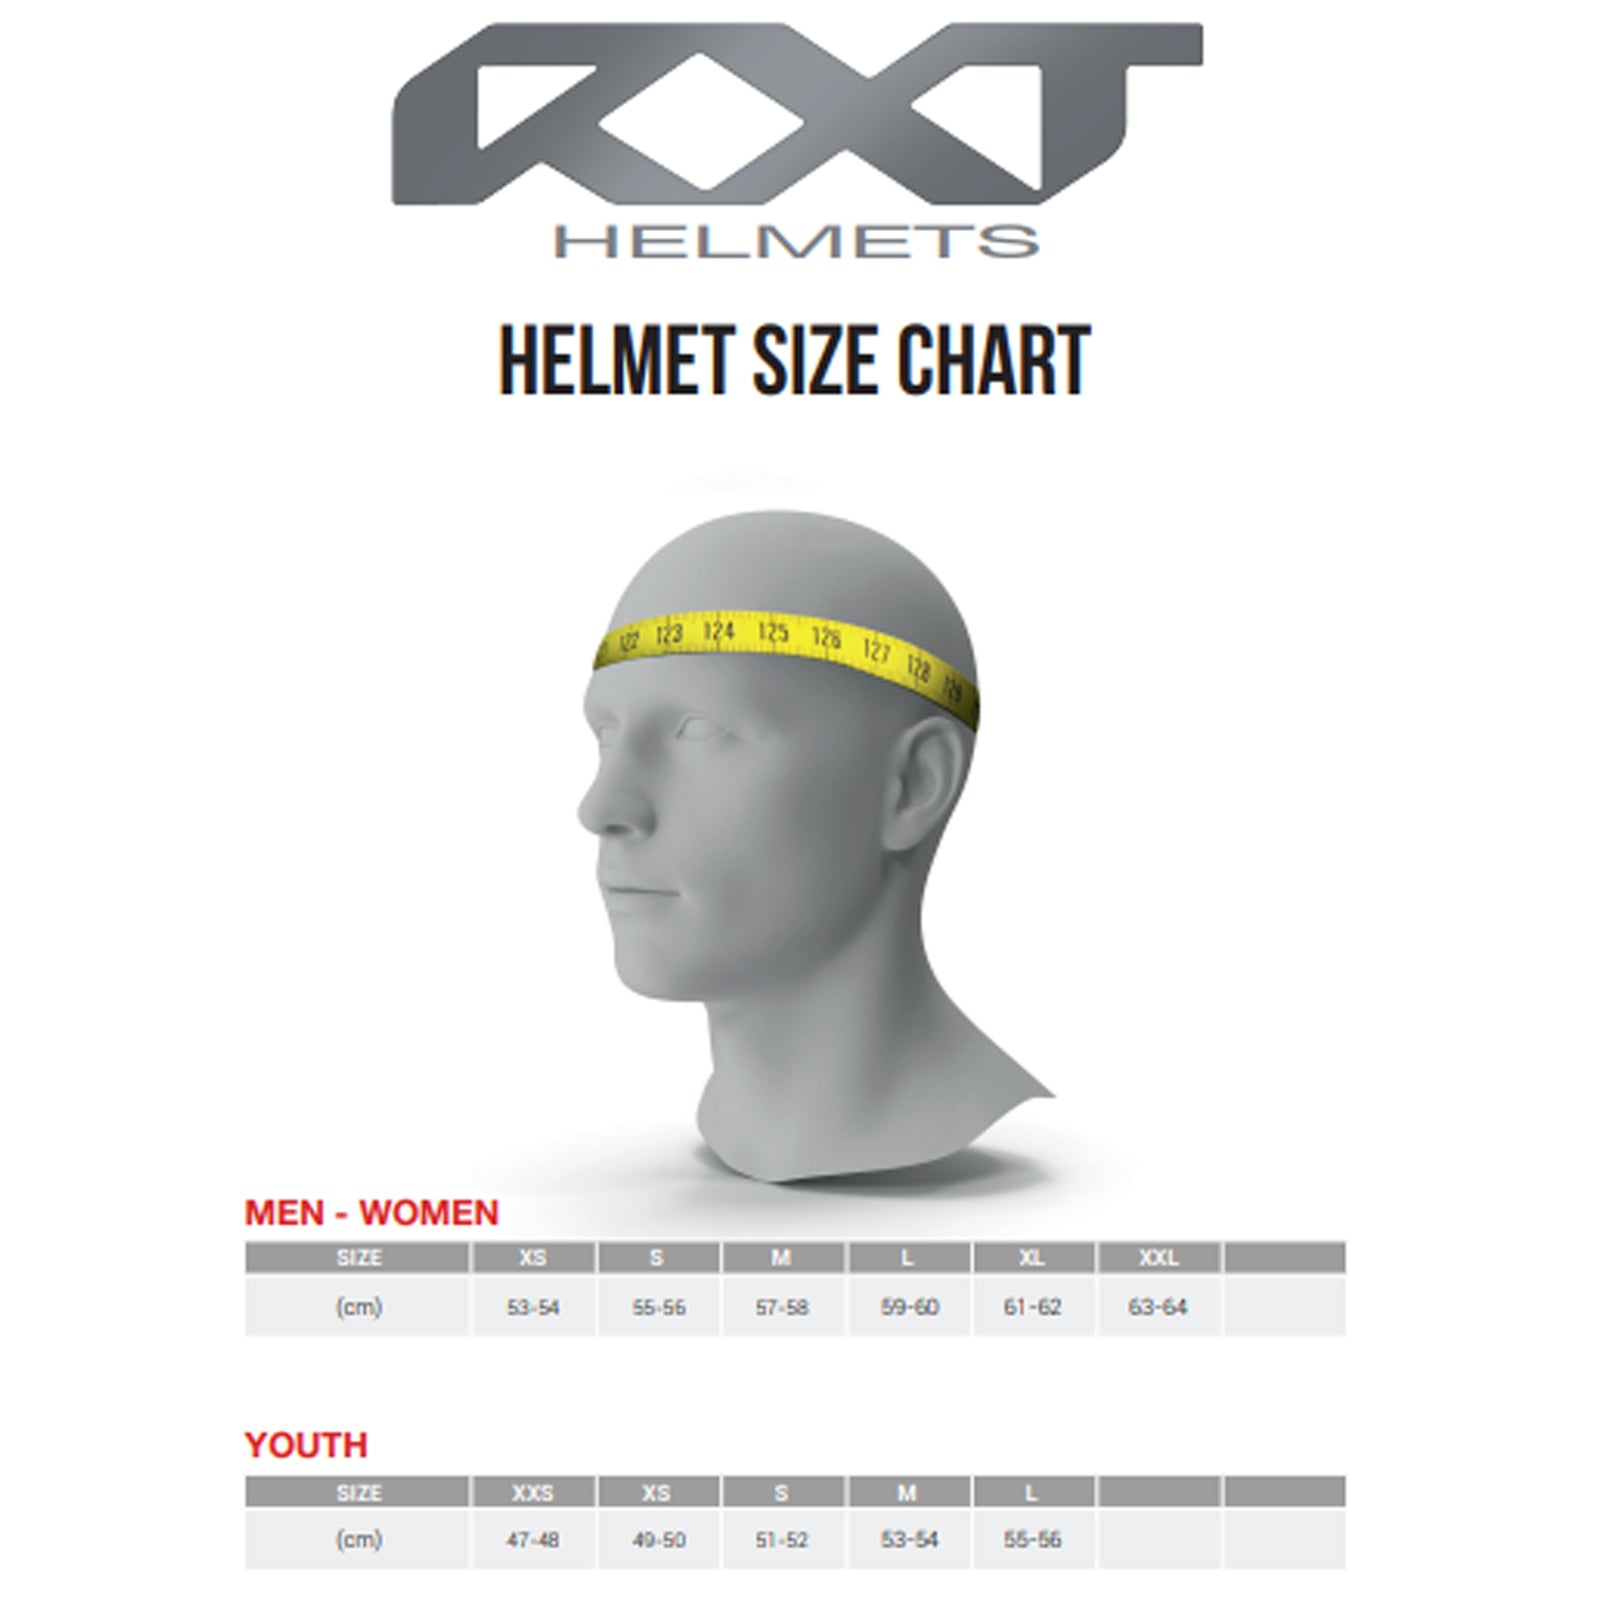 RXT Off Road Helmet Racer 4 Kids MX Matt Black